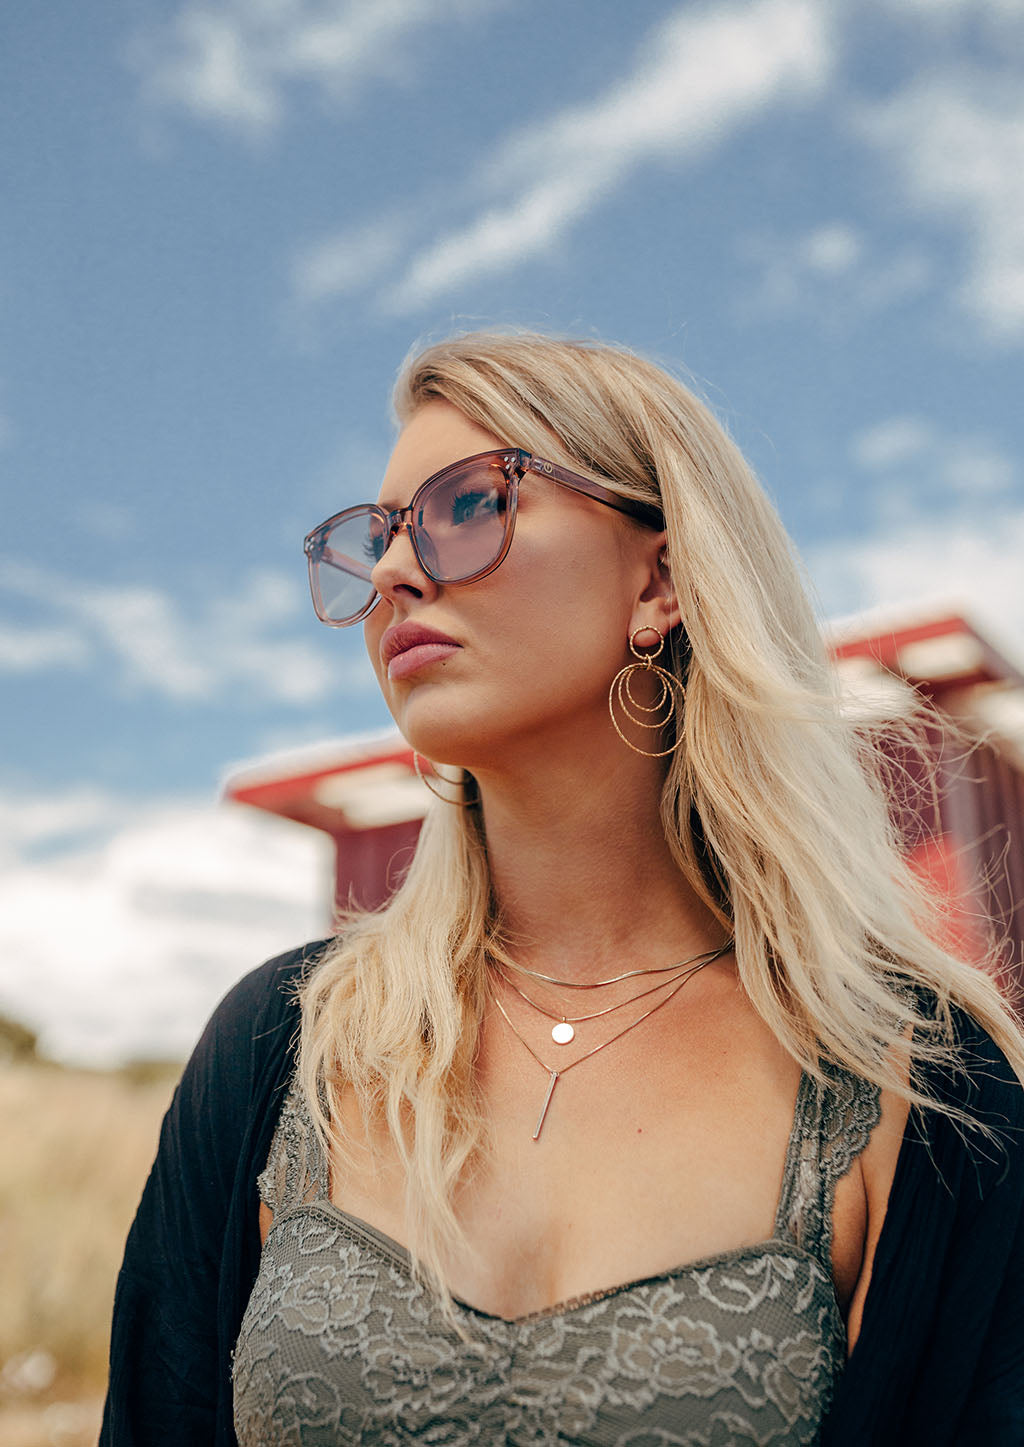 Jasmine Wayfarer sunglasses - On blonde female model